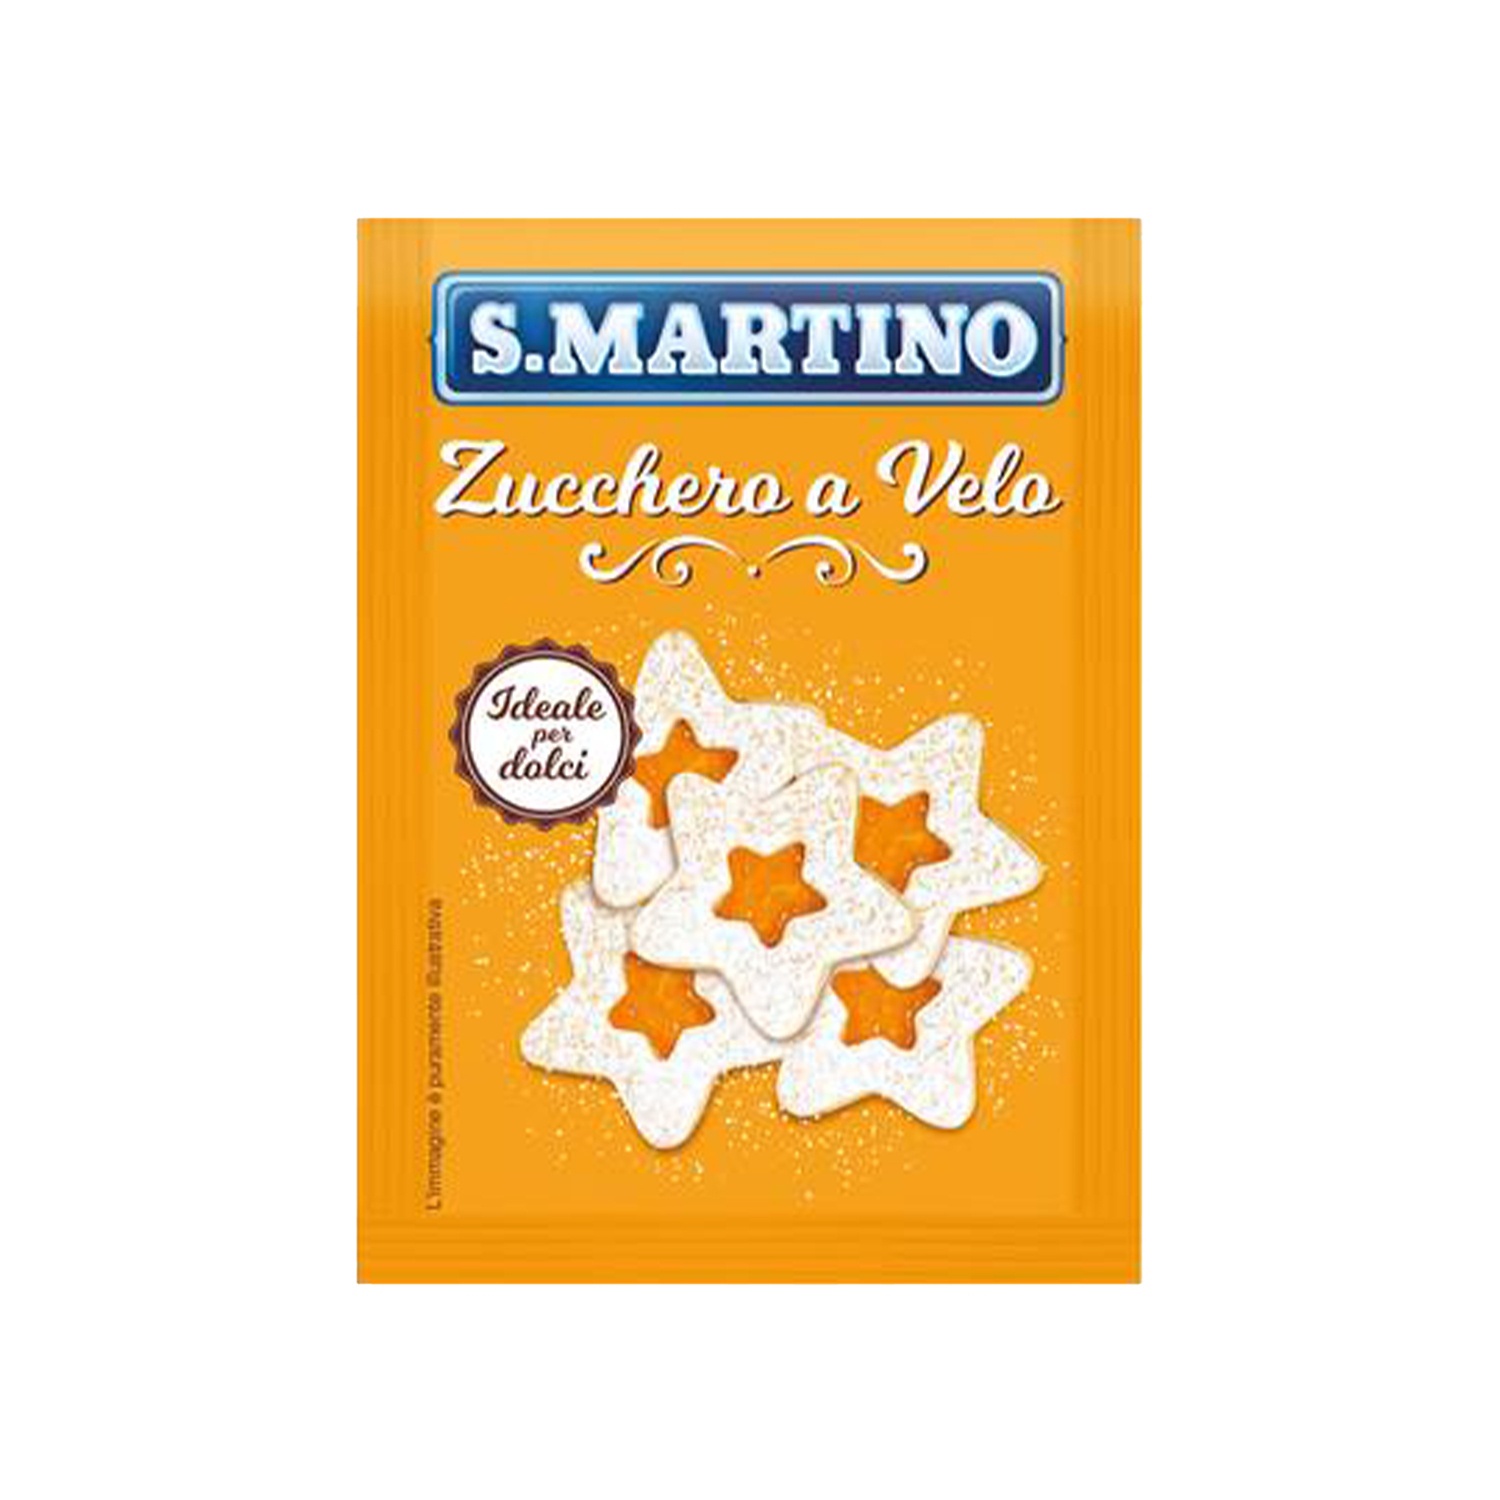 S. MARTINO Zucchero a velo in bustine